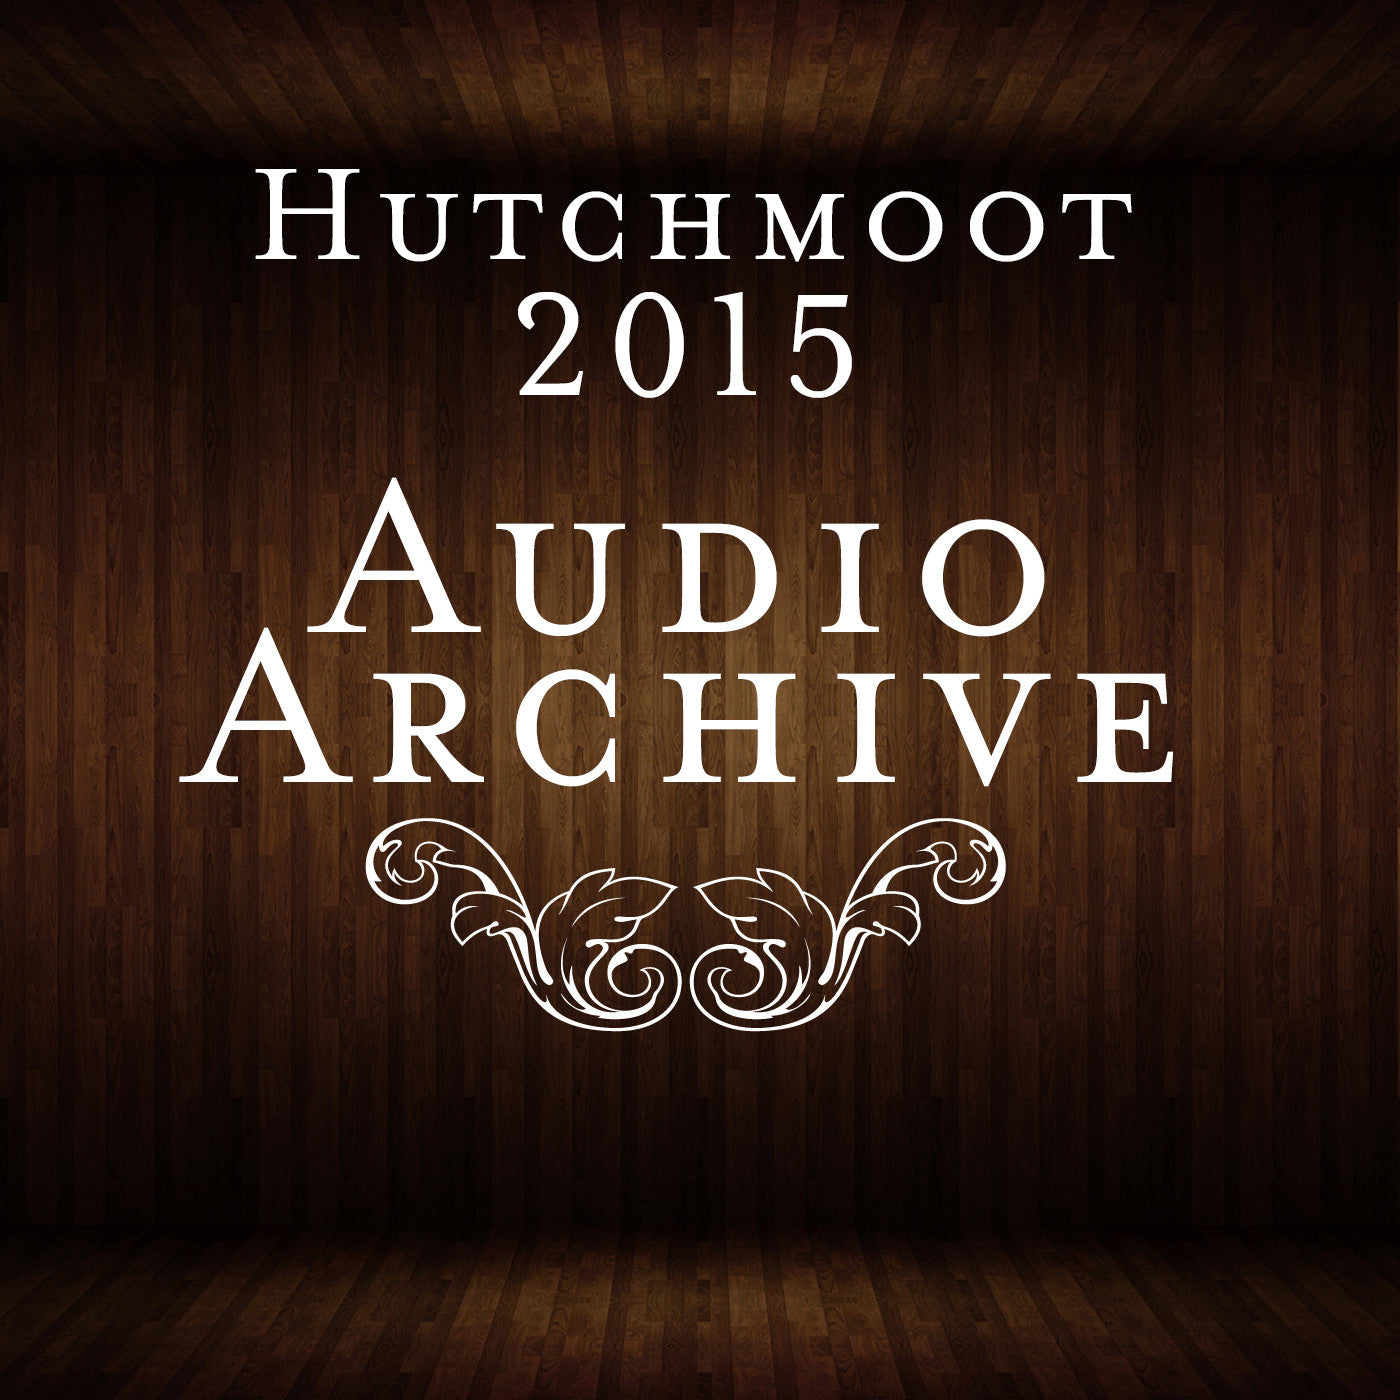 Hutchmoot 2015 Audio Archive